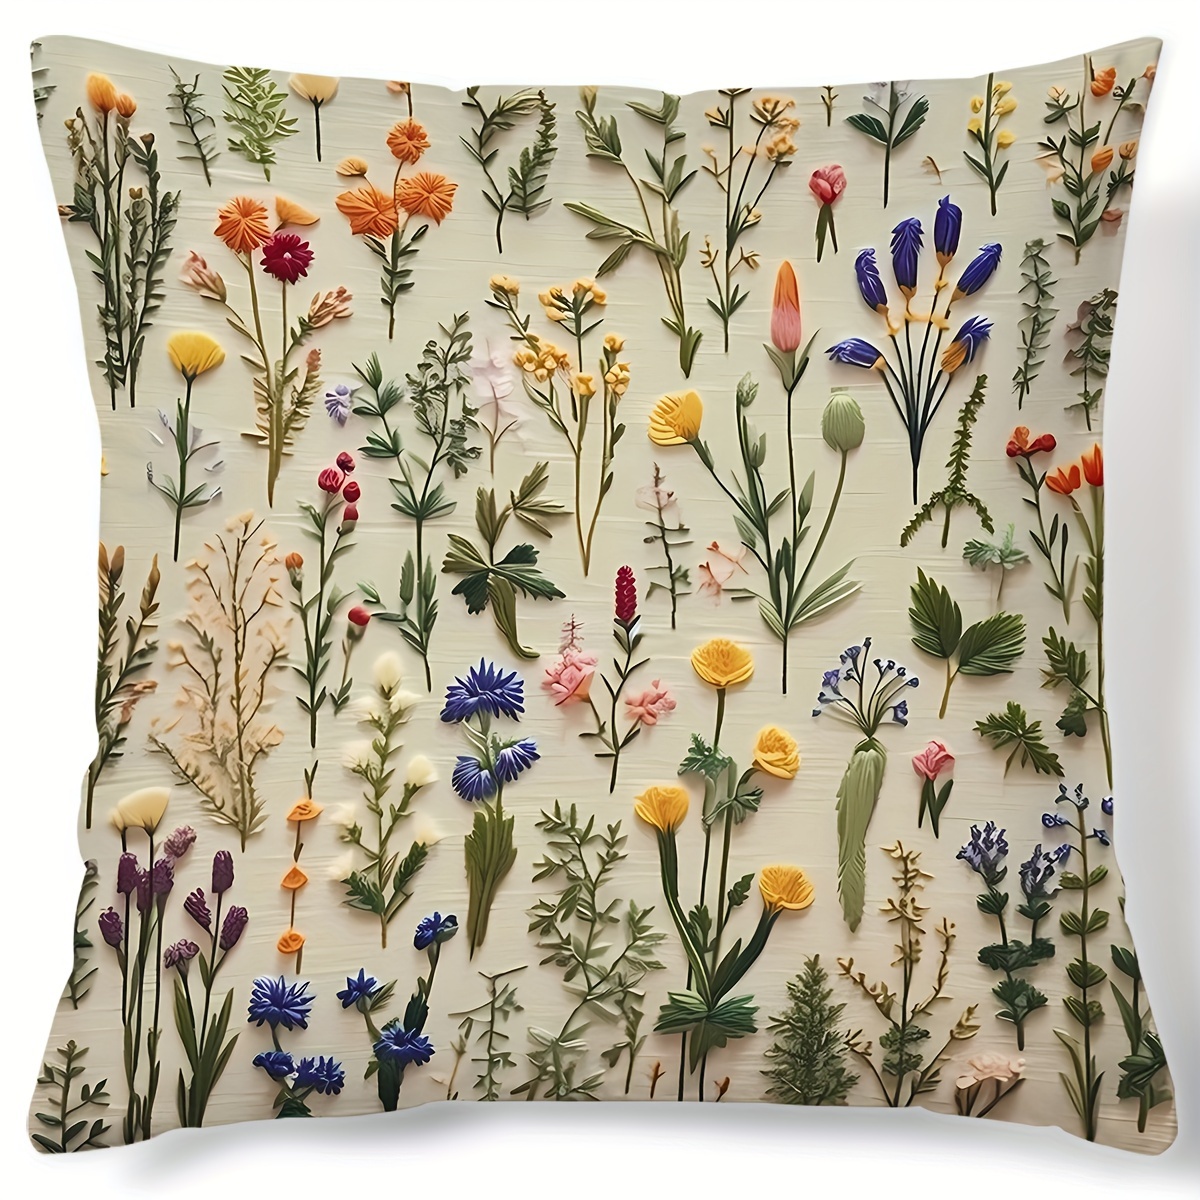 

1pc, Botanical Flower Pattern Cushion Cover, 1pc Digital Print Decorative Throw Pillow Case, Contemporary Style Home Sofa Decor, Multicolor Floral Design, Soft Fabric